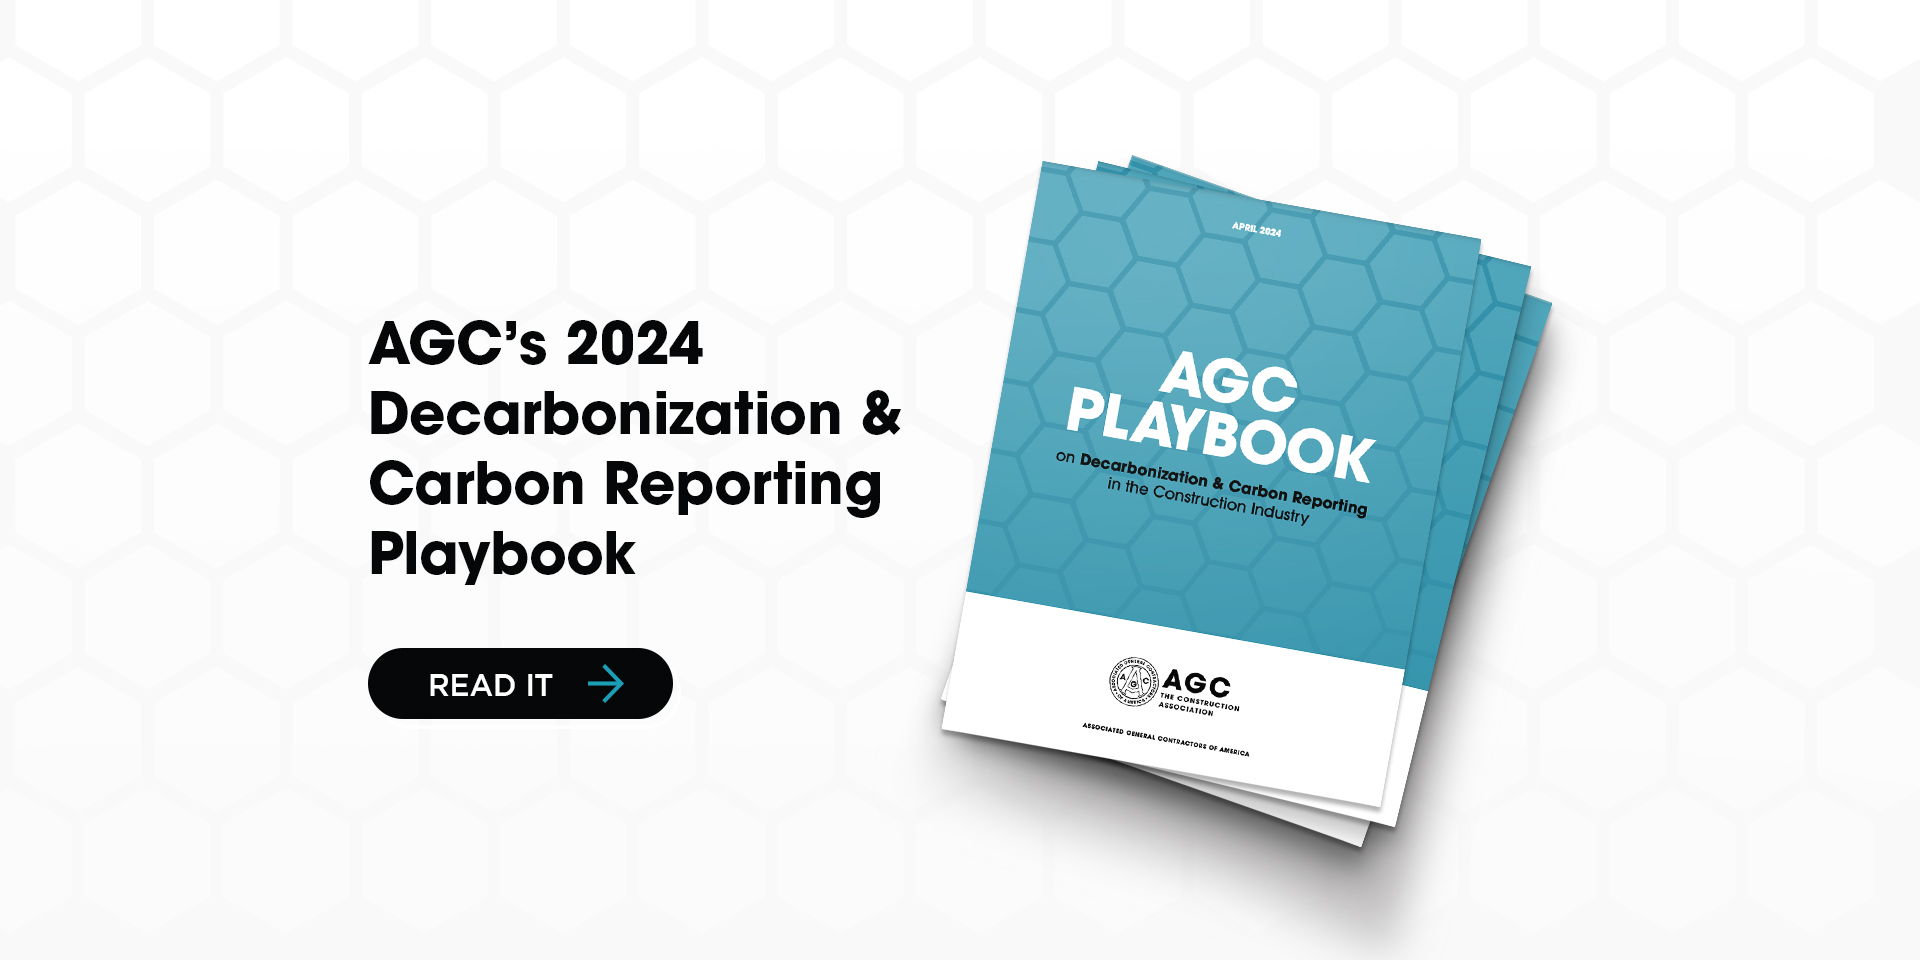 AGC Playbook on Decarbonization